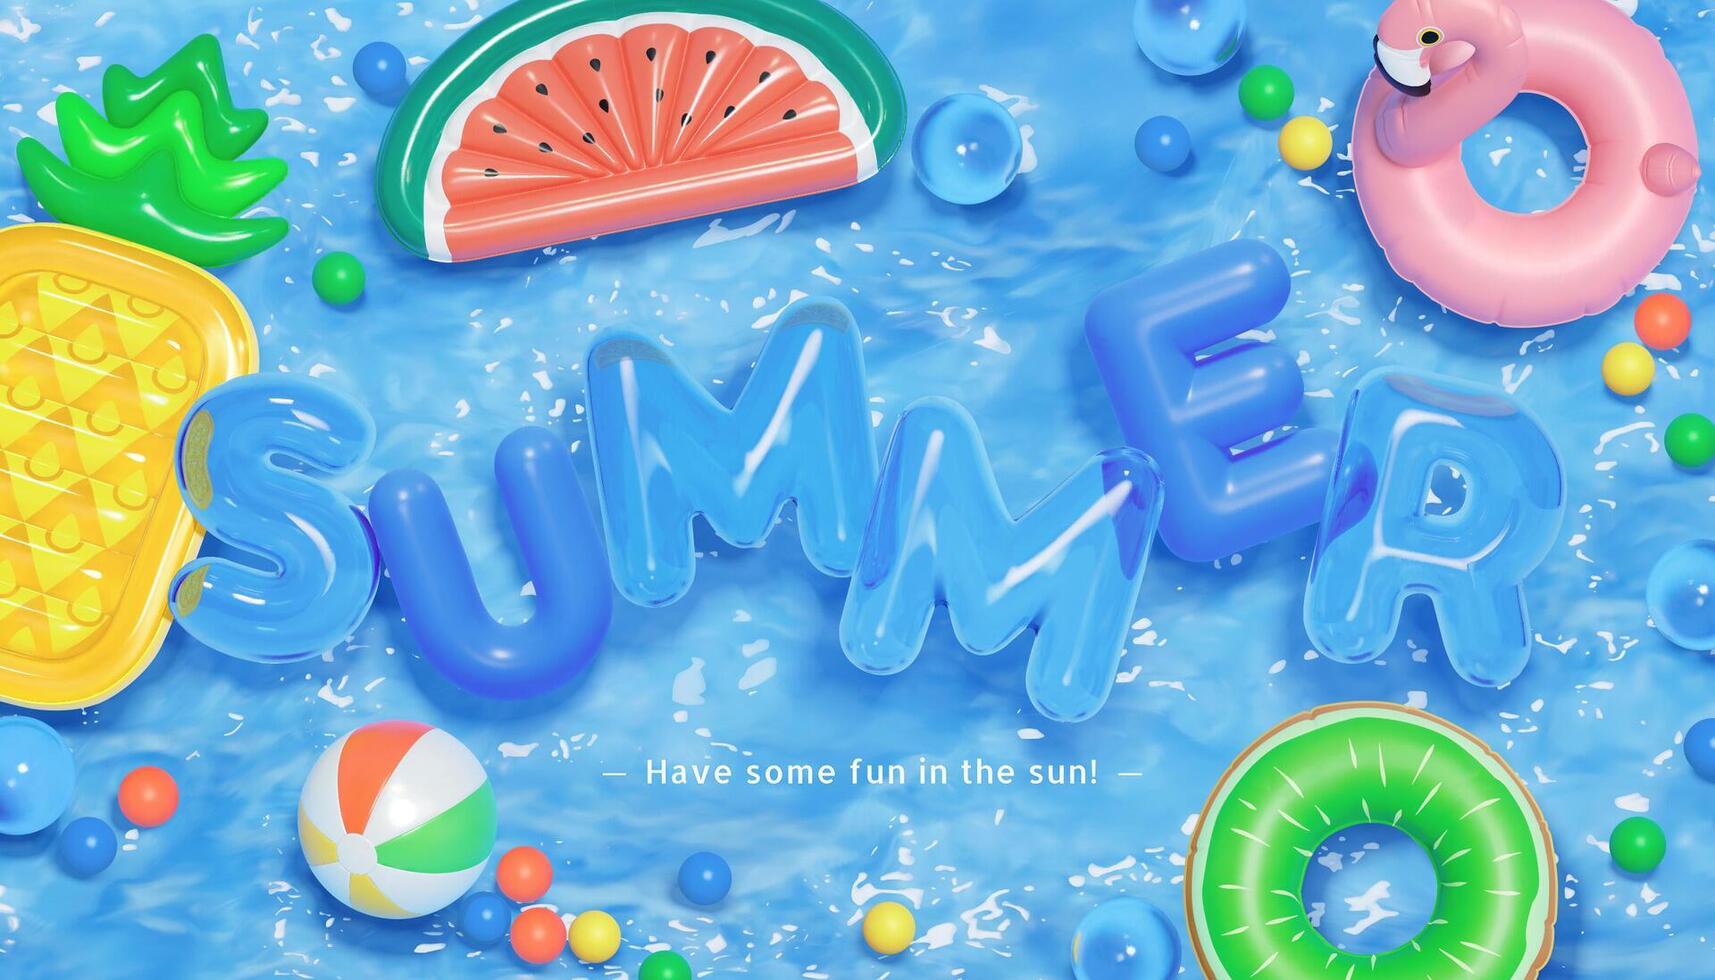 3d creativo verano antecedentes en nadando piscina fiesta tema. parte superior ver de pelotas, nadar anillos y Fruta forma colchonetas flotante en agua. vector